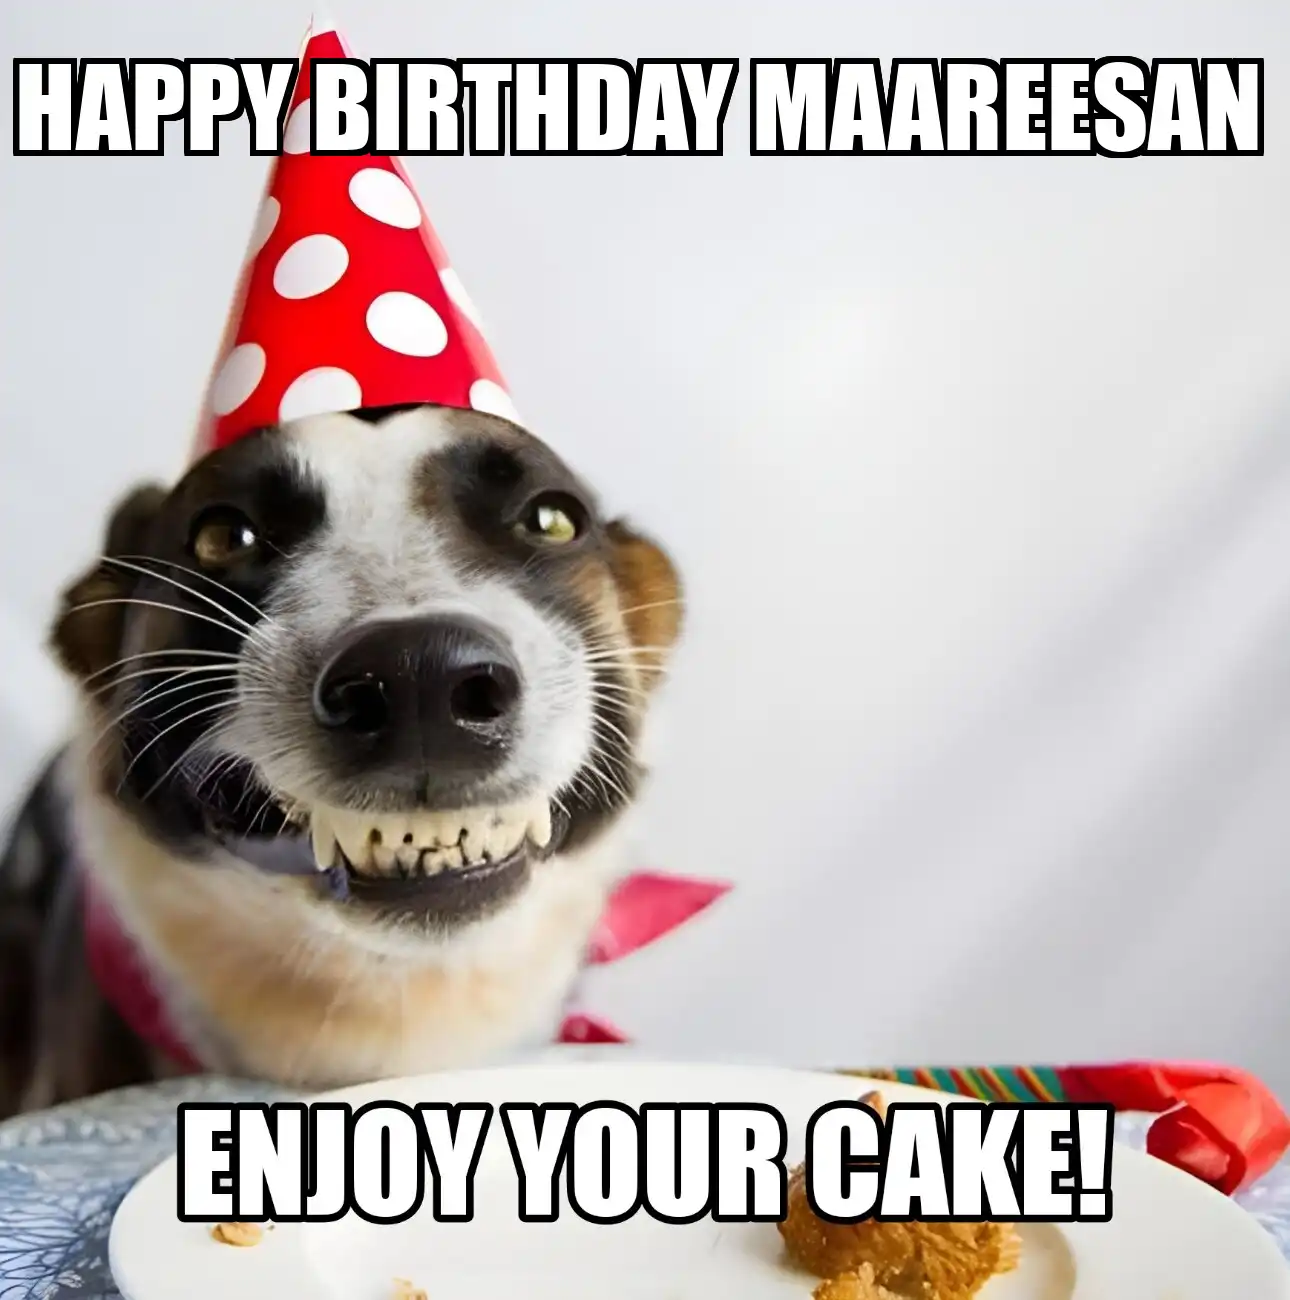 Happy Birthday Maareesan Enjoy Your Cake Dog Meme